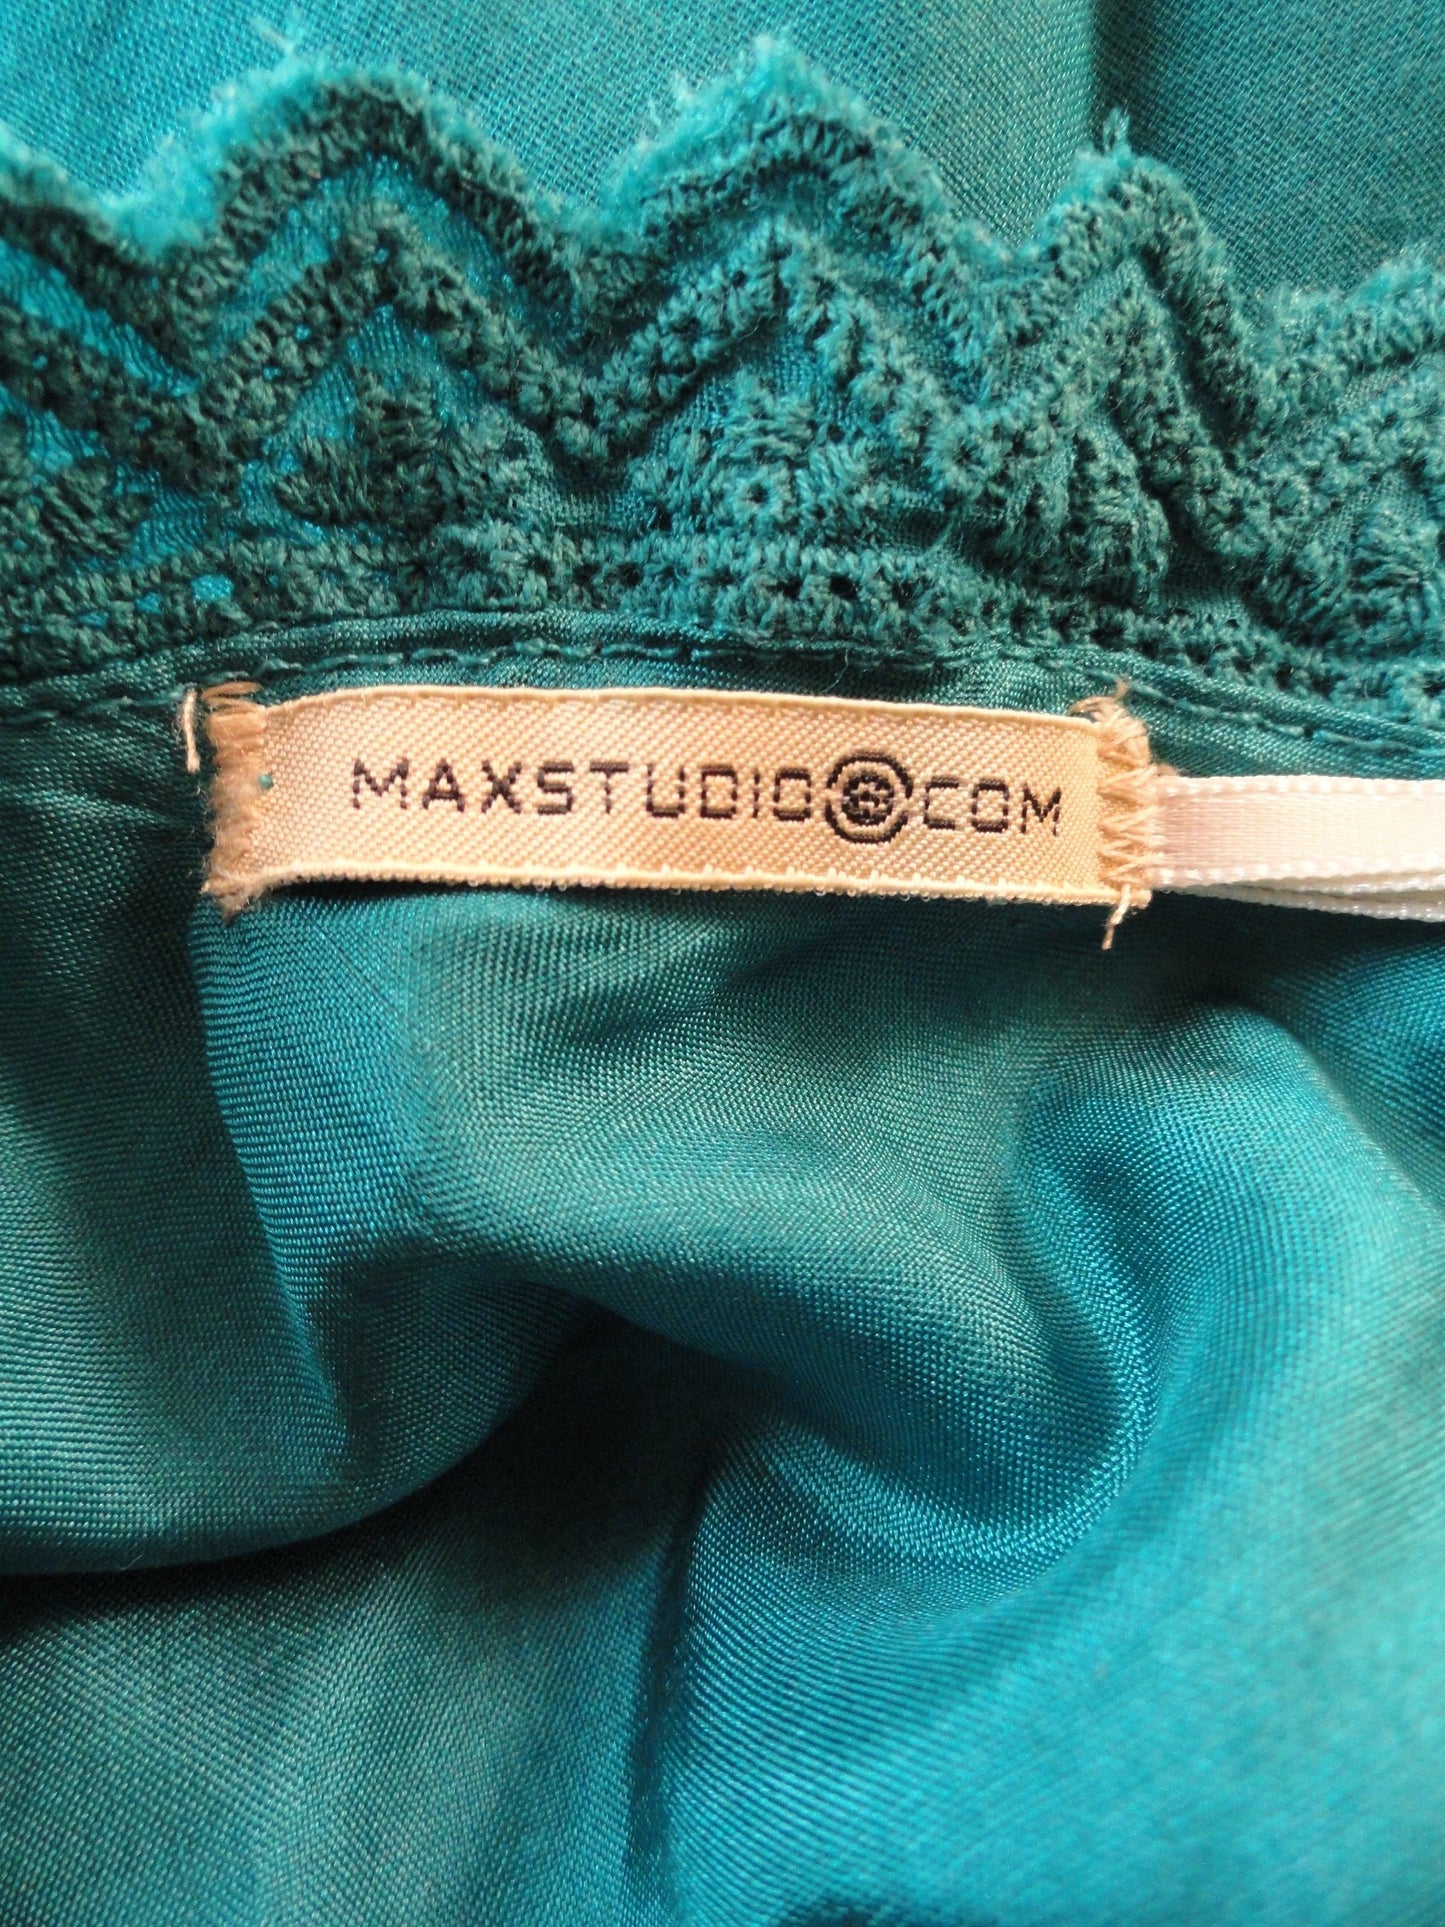 Max Studio 70's Turquoise Boho Top Size Small SKU 000071